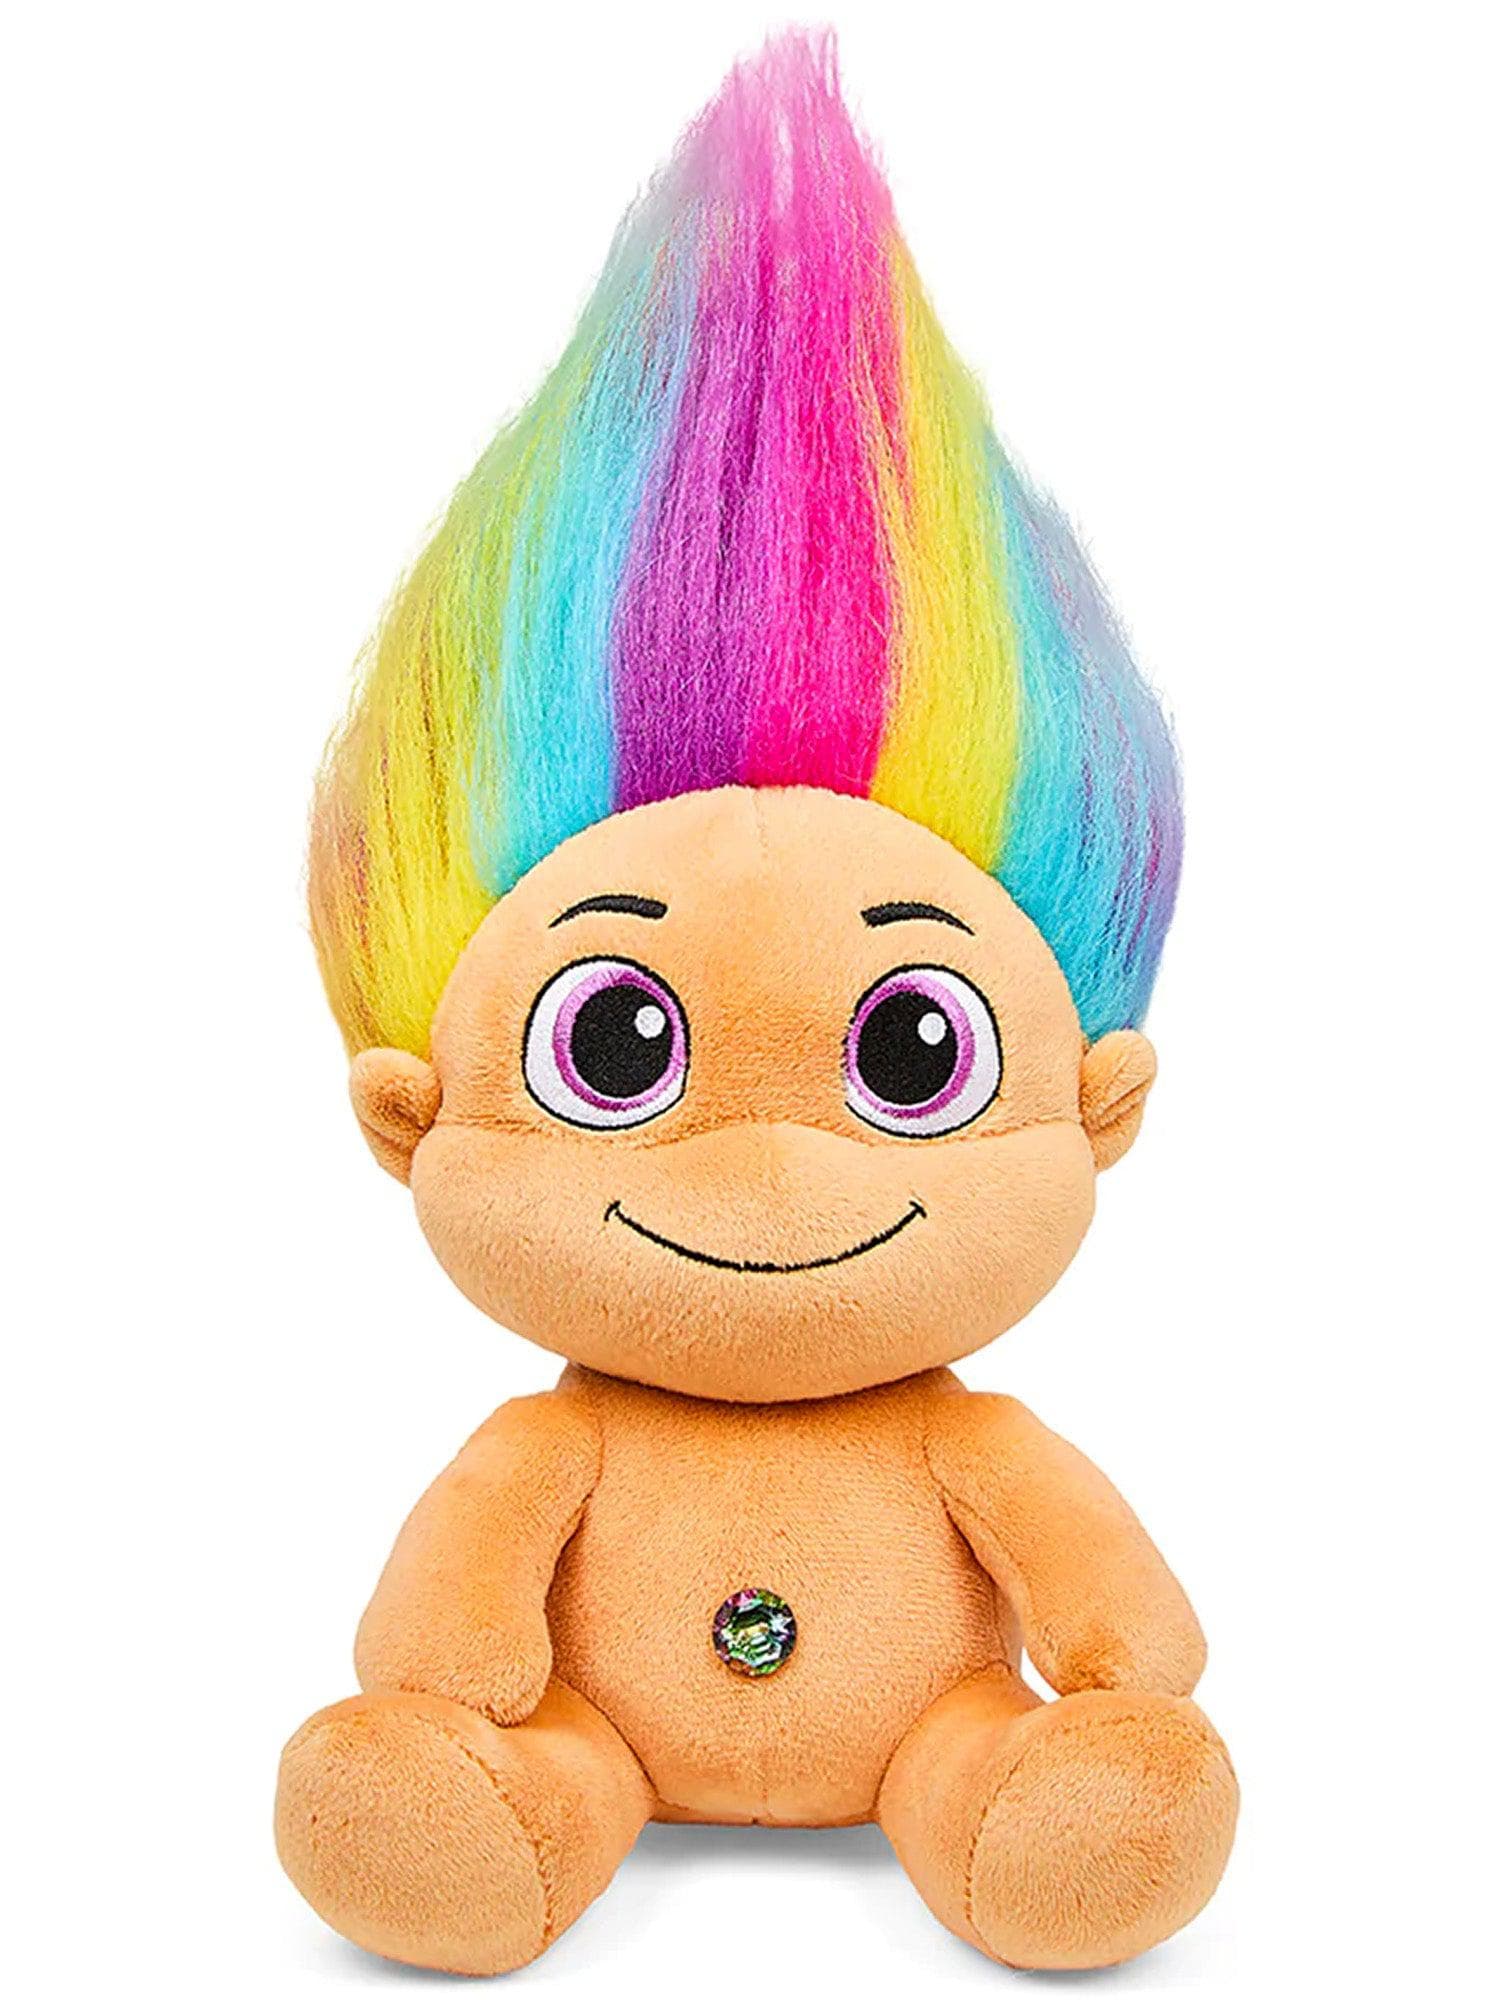 Trolls Peach Troll with Rainbow Hair 8" Phunny Plush - costumes.com